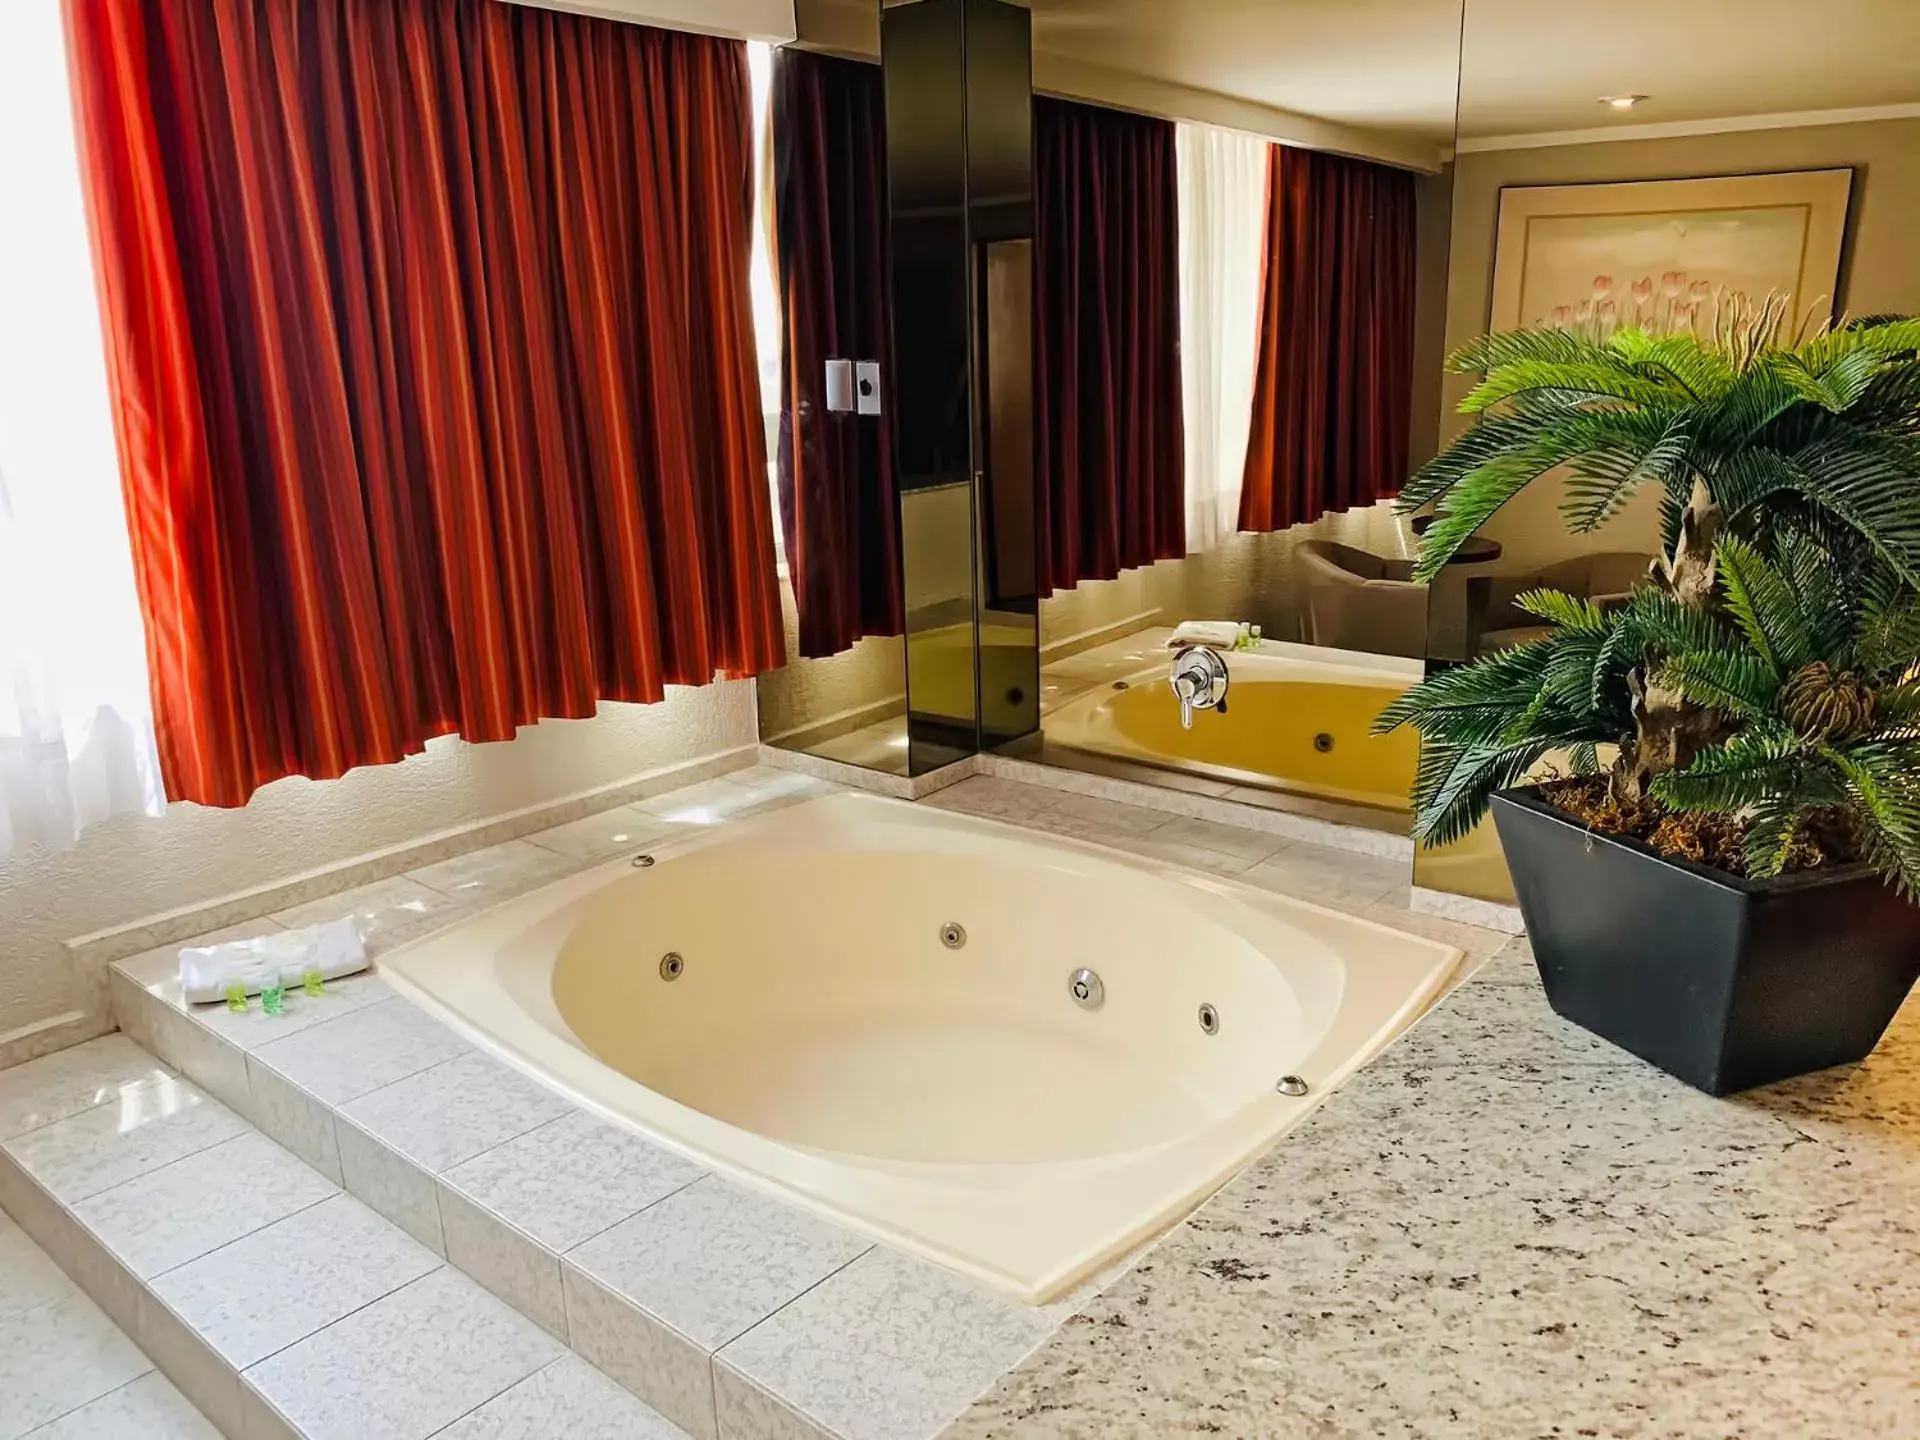 Photo of the whole room, Bathroom in Hotel Benidorm